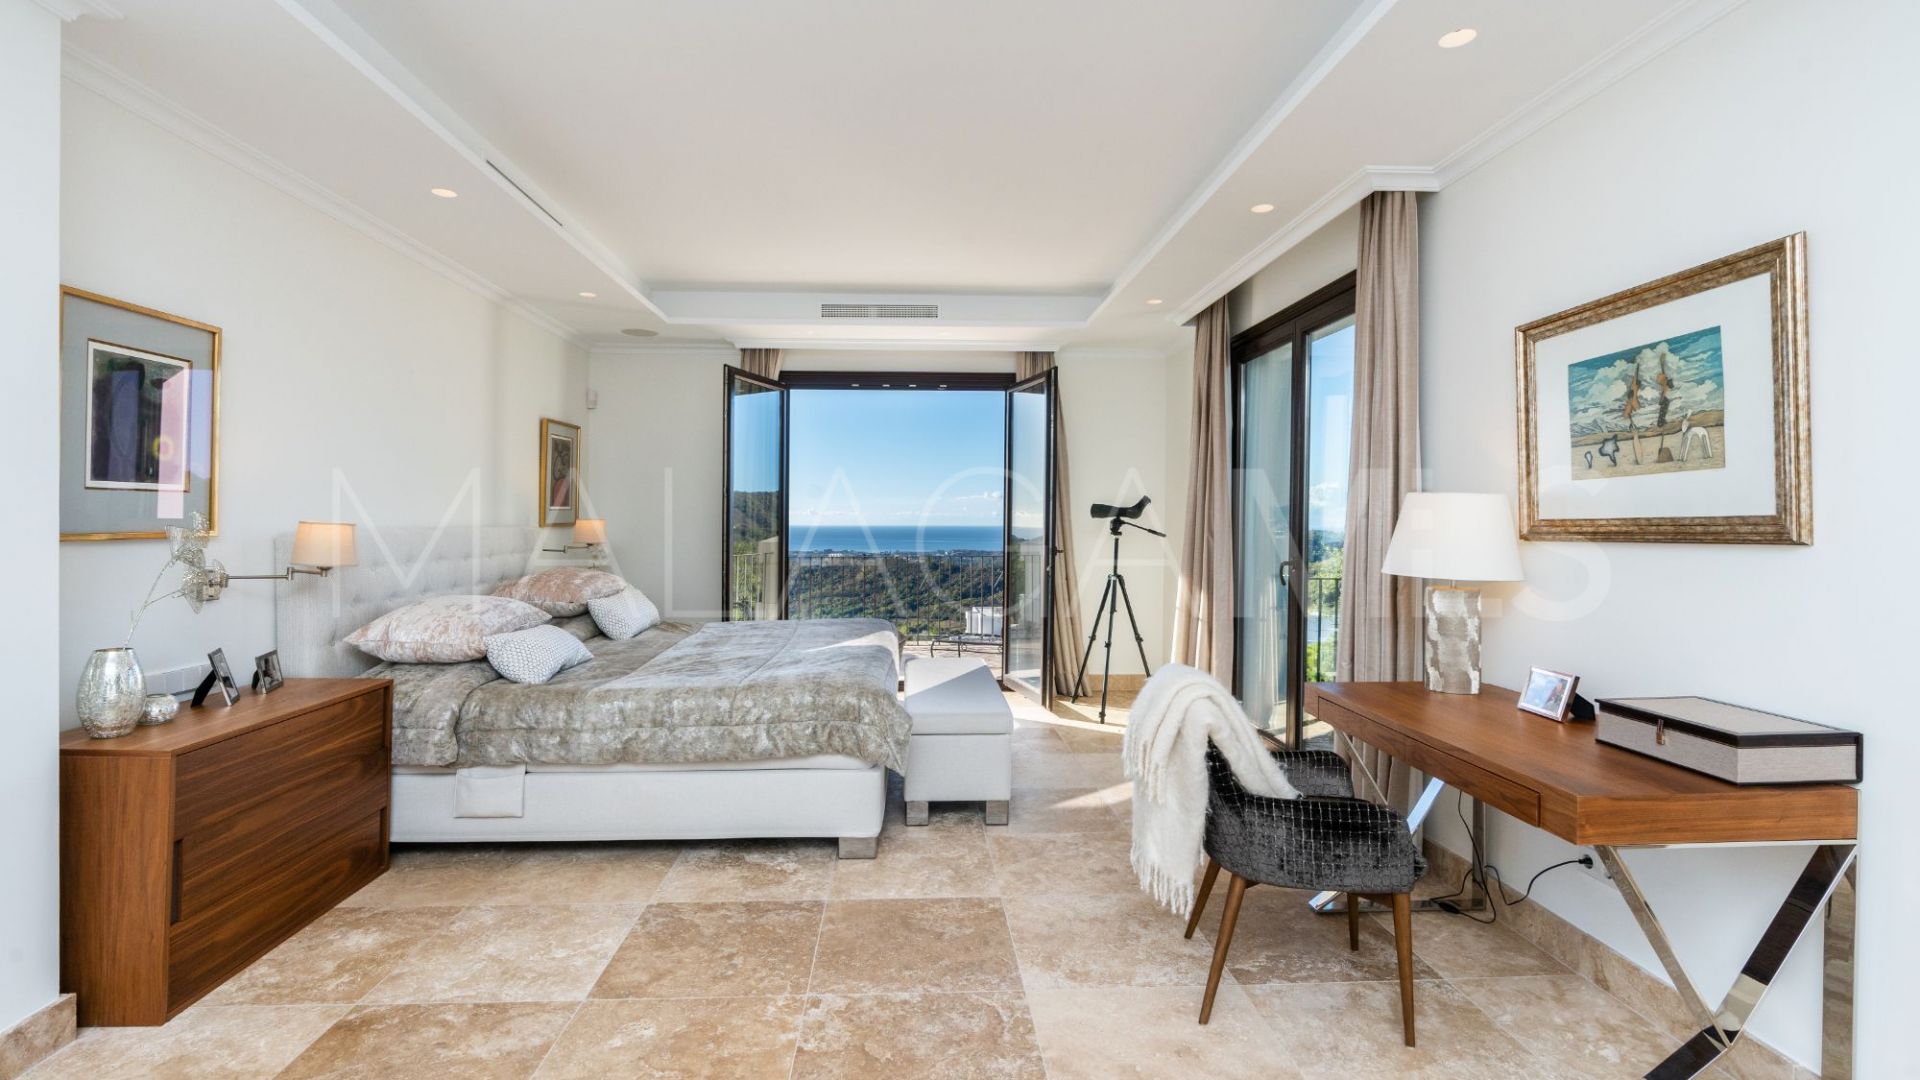 4 bedrooms villa in Monte Mayor for sale